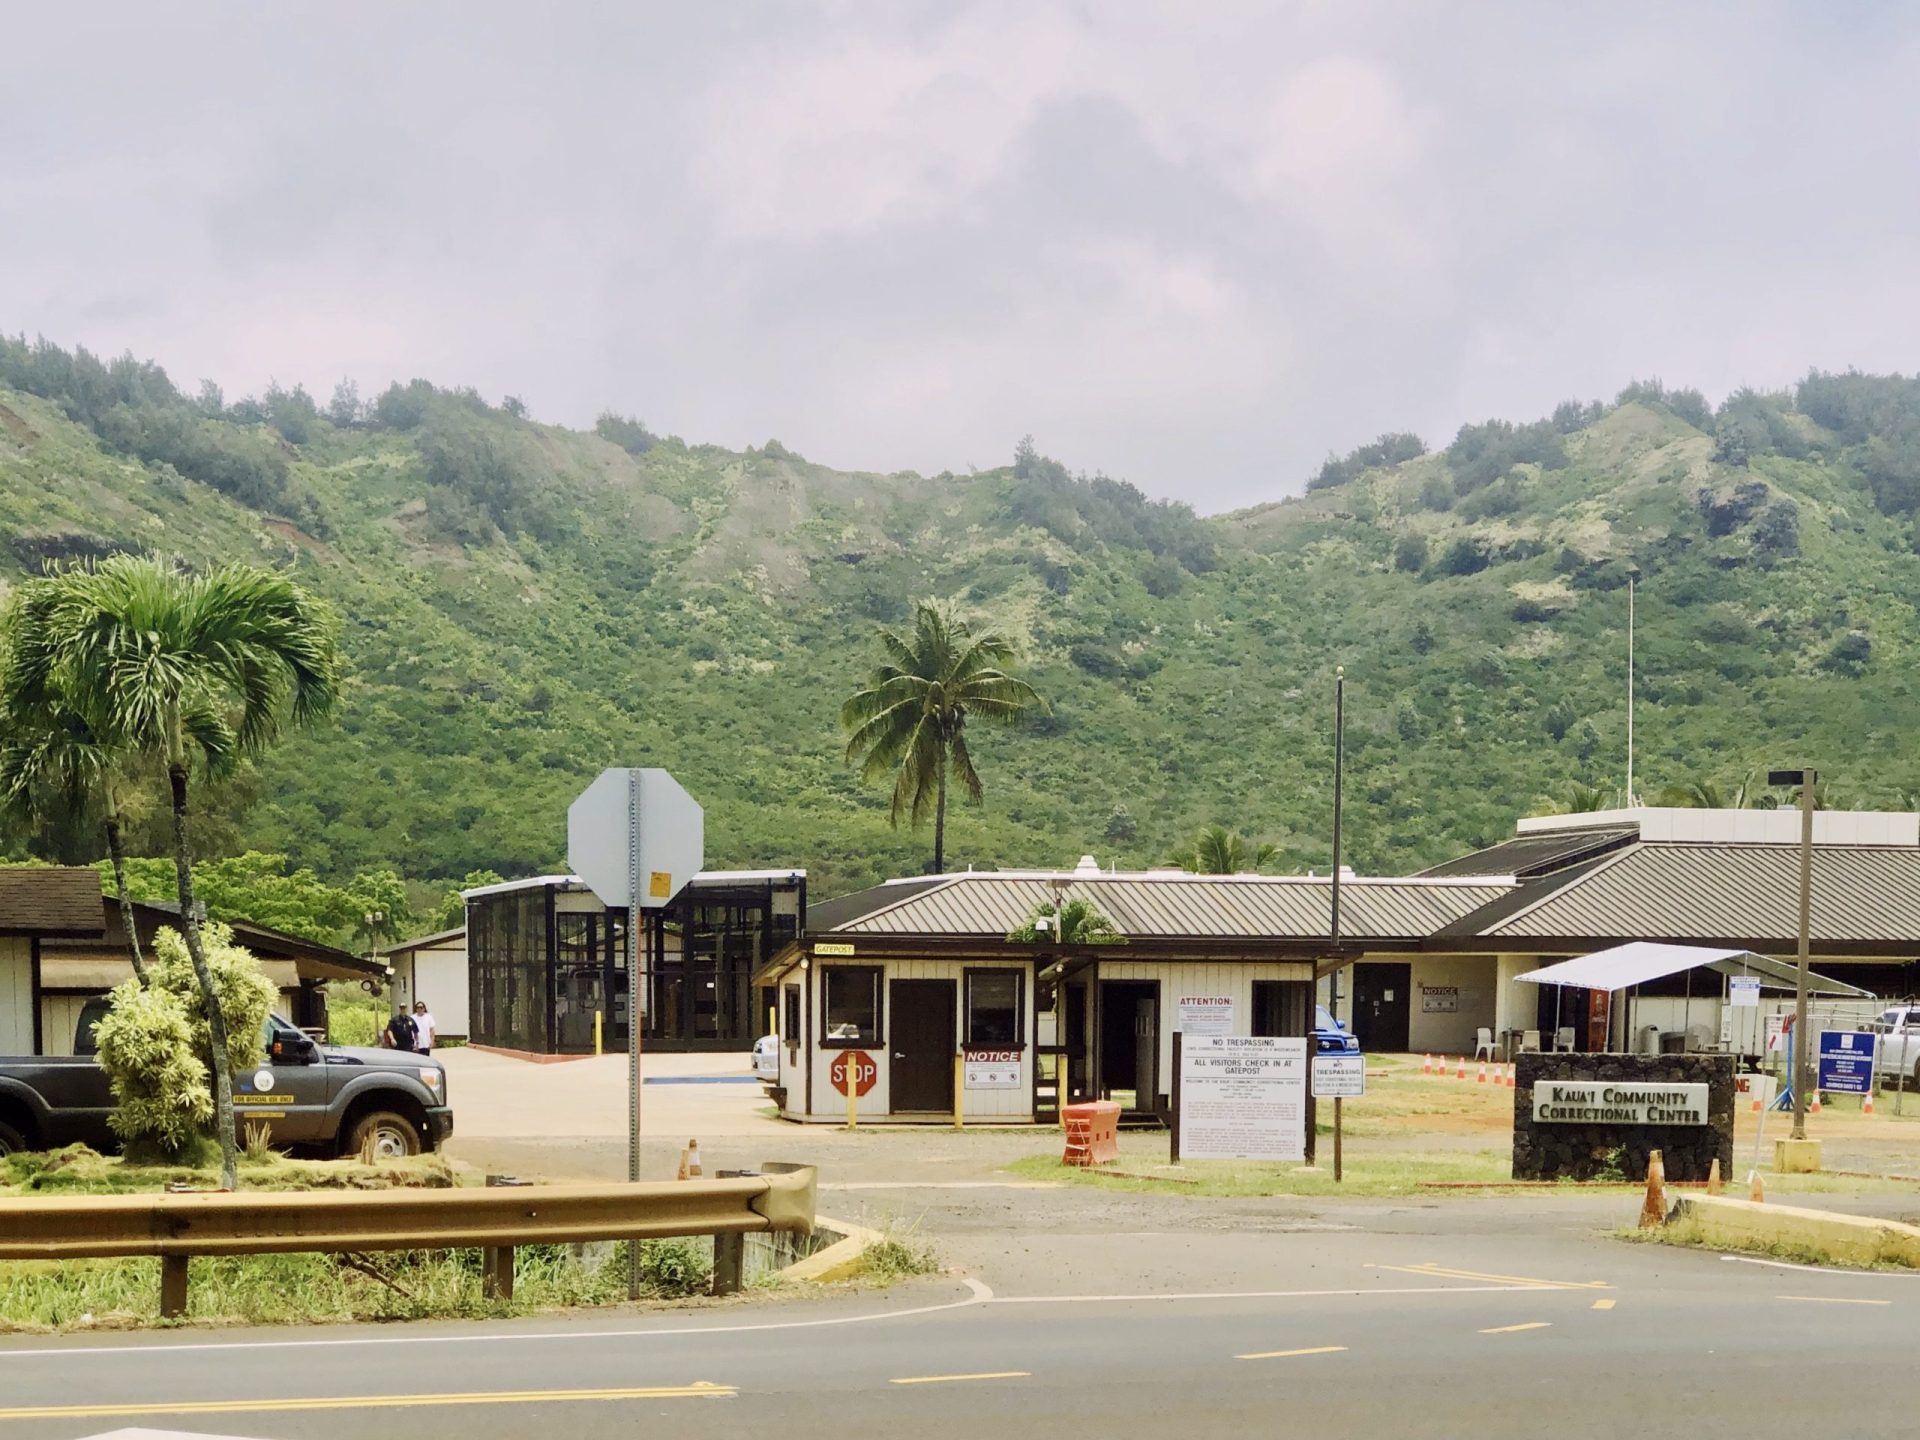 kauai community correctional center